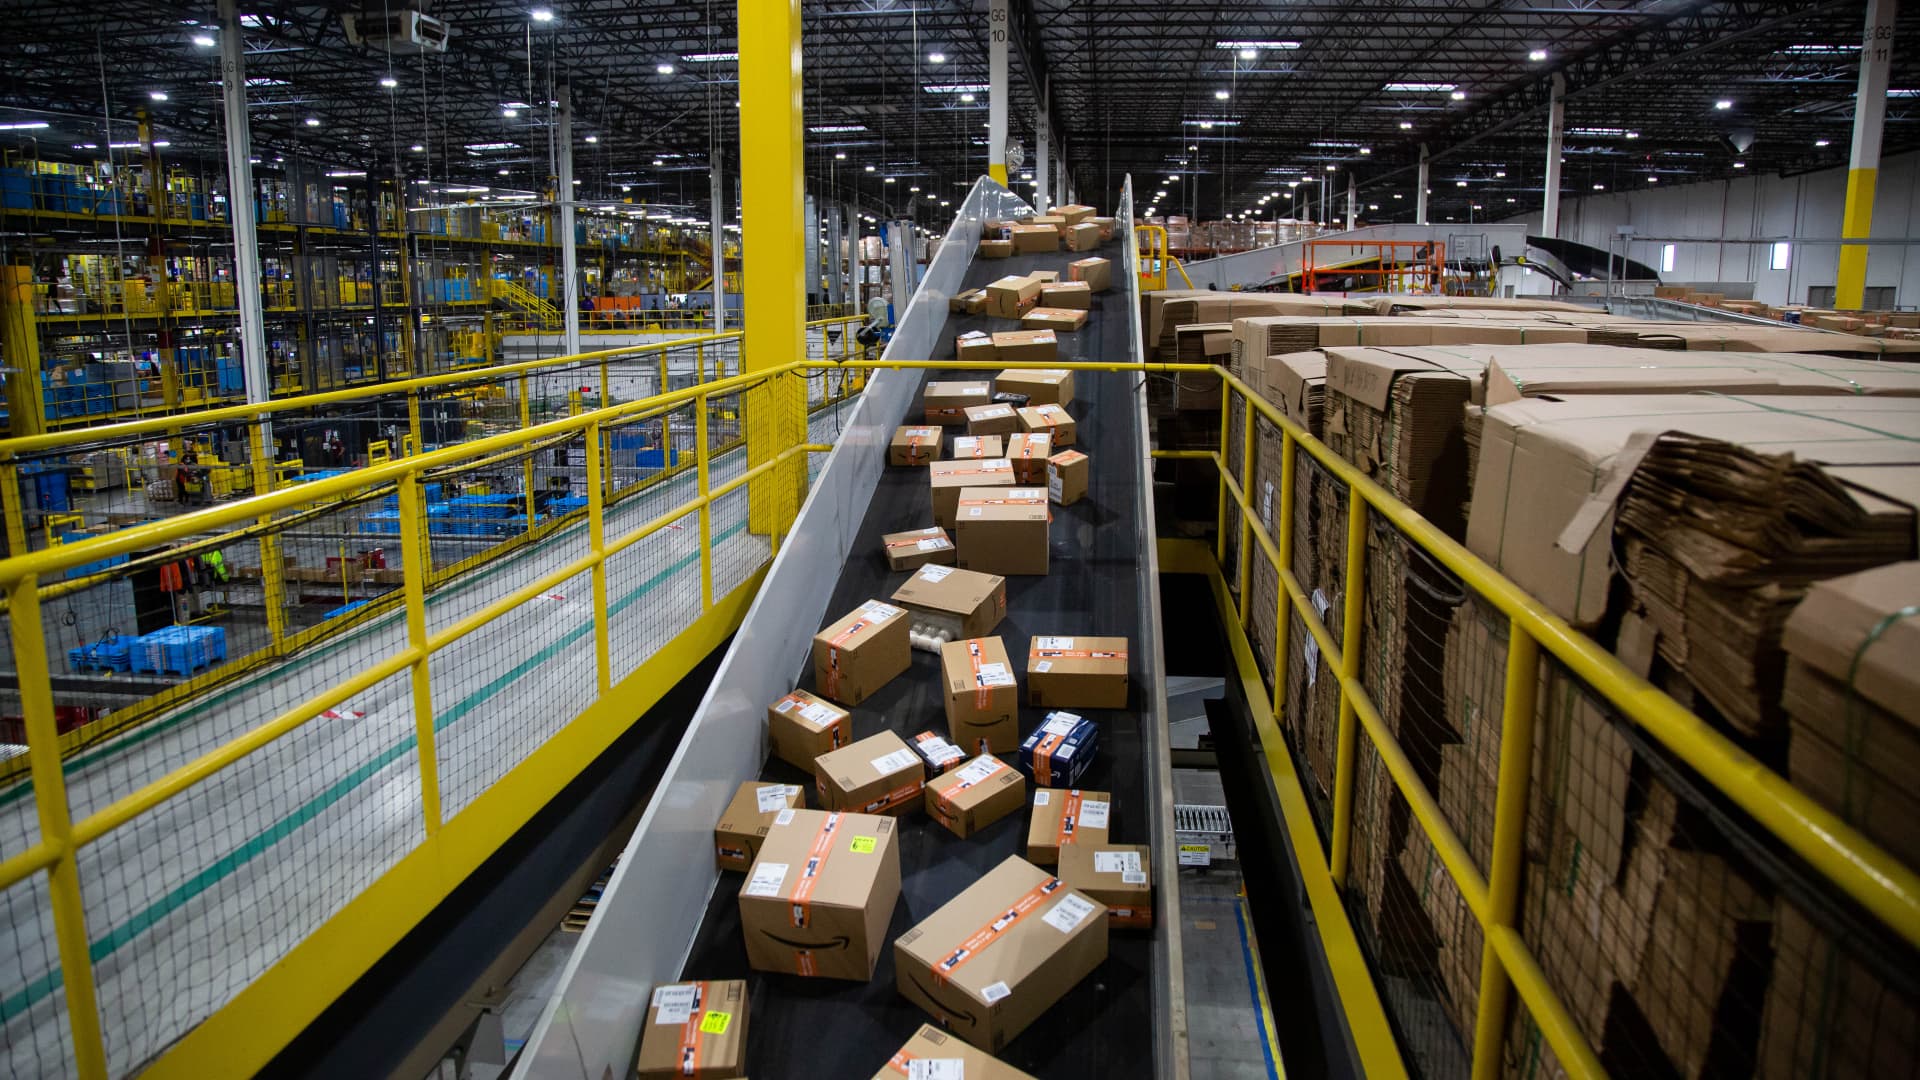 Amazon temporarily closes some Florida warehouses as Hurricane Ian approaches - CNBC